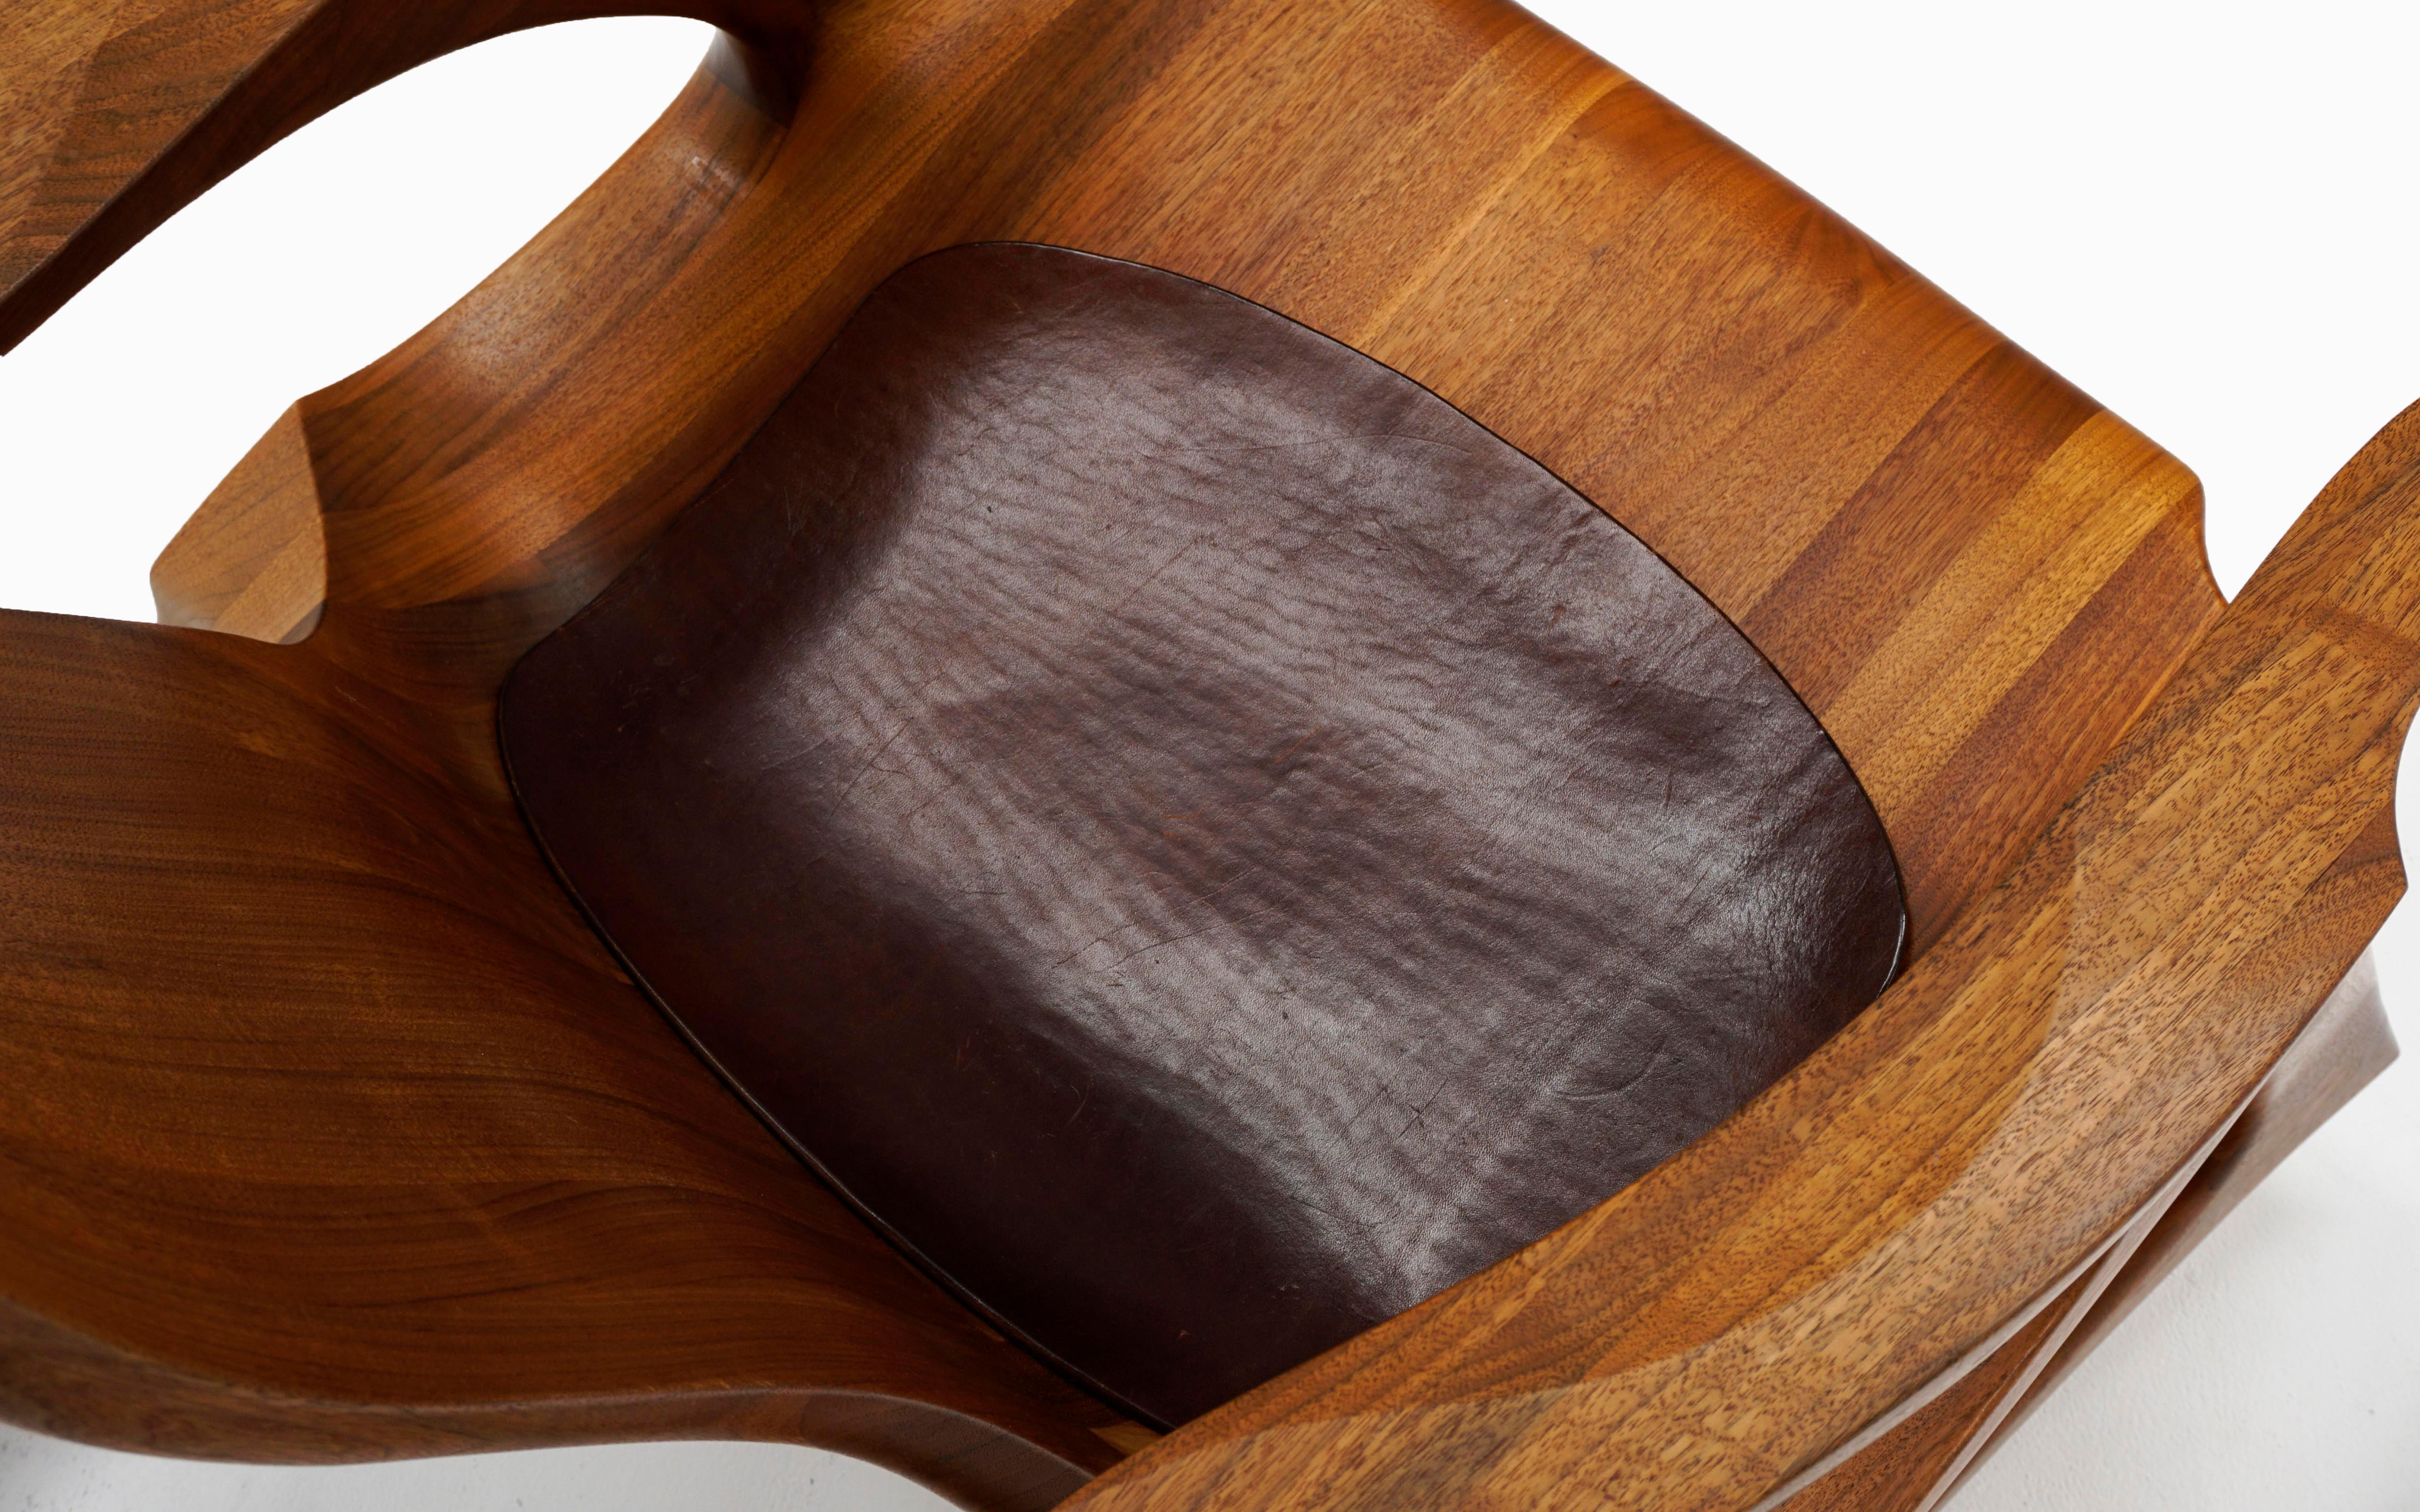 American Studio Craft Sculptural Walnut Rocking Chair, Hand Crafted, Marked 5